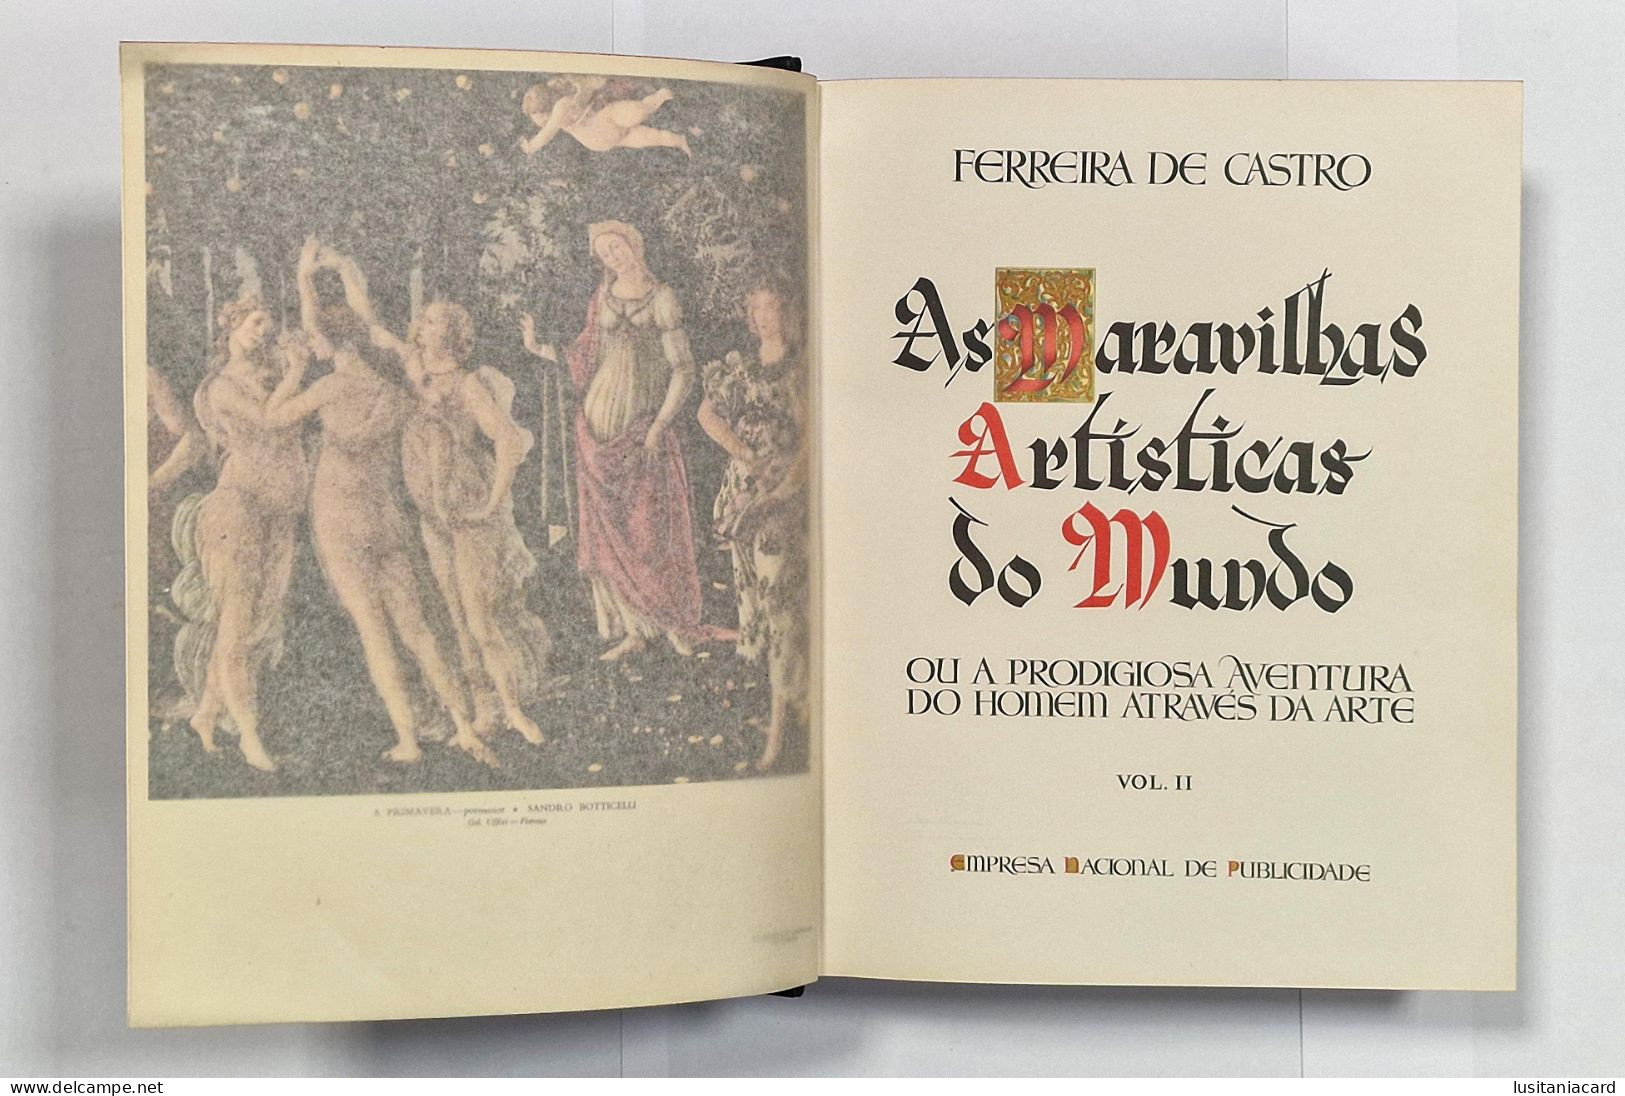 As Maravilhas Artísticas do Mundo.(2VOLUMES)(RARO)( Autor:Ferreira de Castro / Ed. Empresa Nacional de Publicidade-1958)